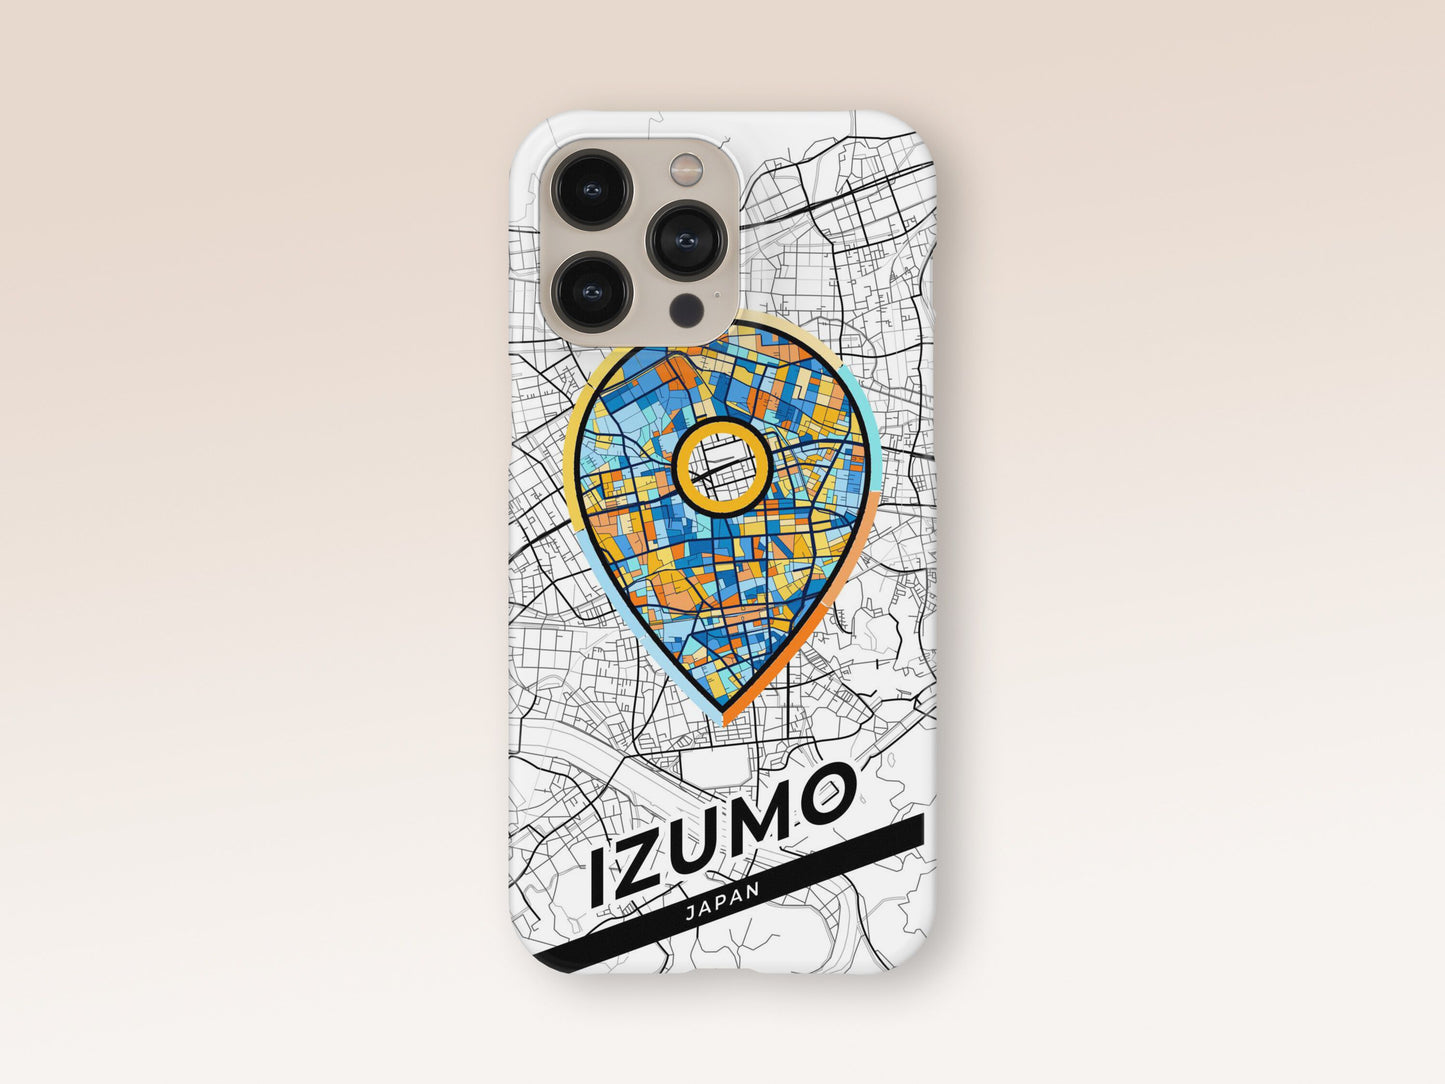 Izumo Japan slim phone case with colorful icon. Birthday, wedding or housewarming gift. Couple match cases. 1